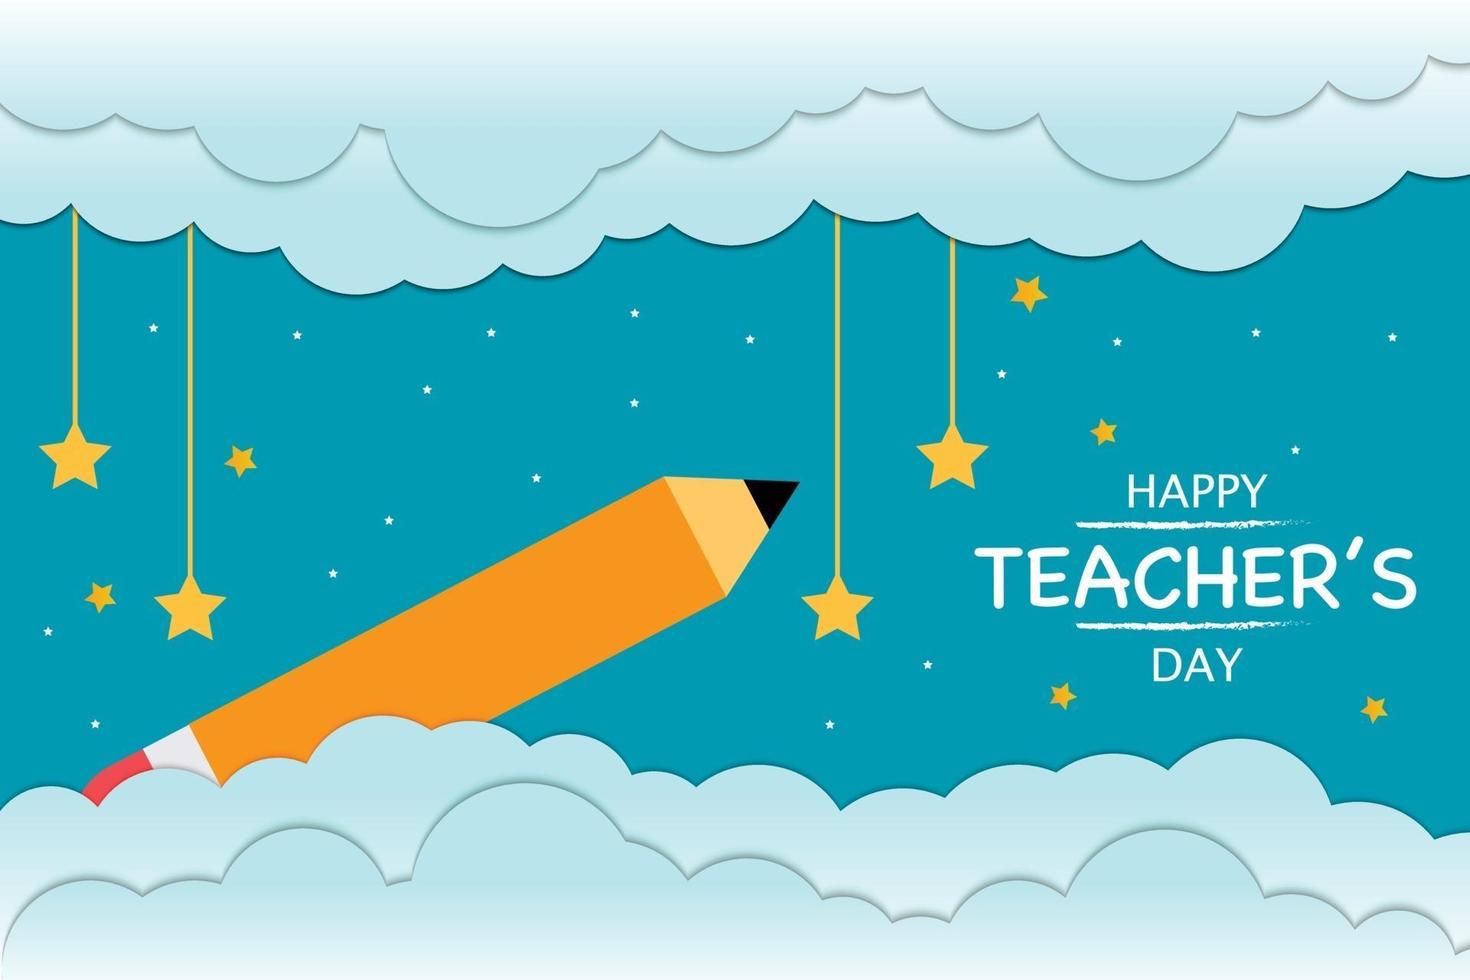 Happy Teacher's Day Pencil Cloud Papercut Style vector